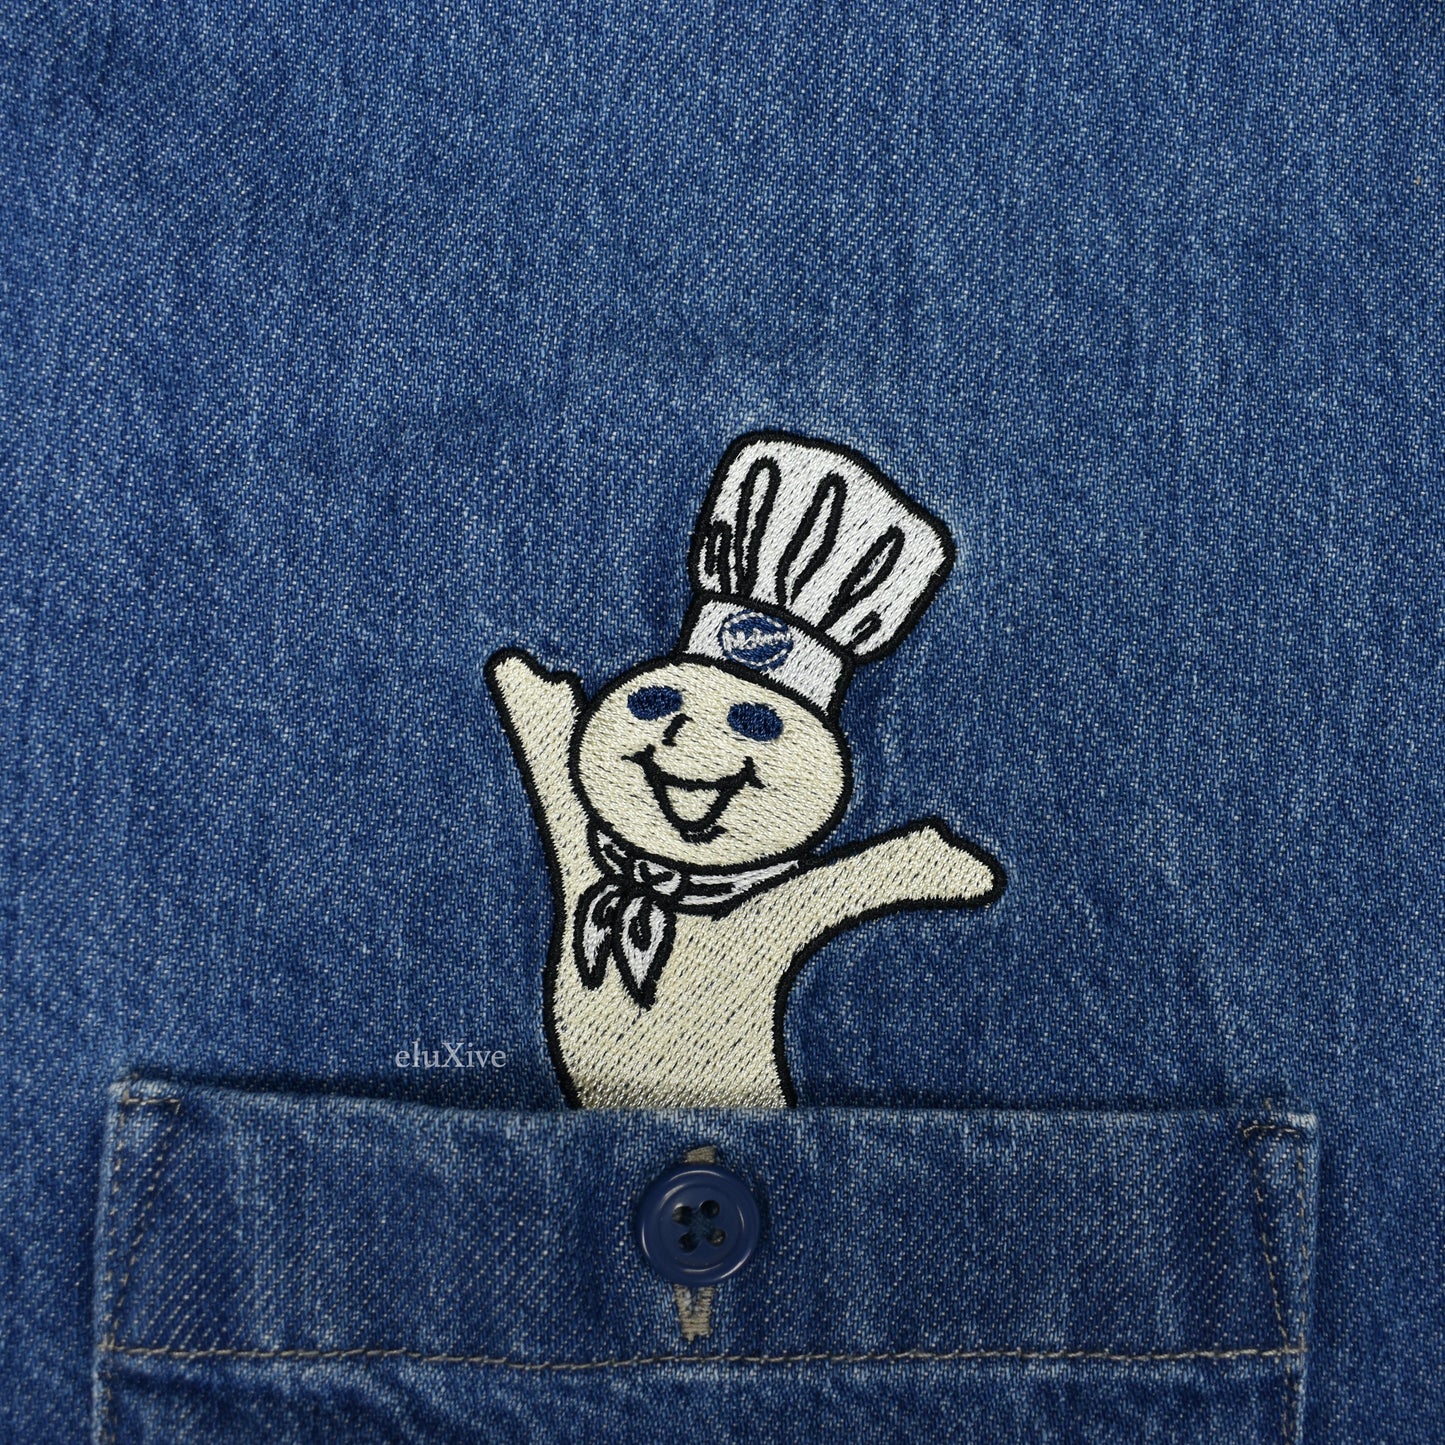 Supreme x Pillsbury - Doughboy Embroidered Denim Work Shirt (Blue)